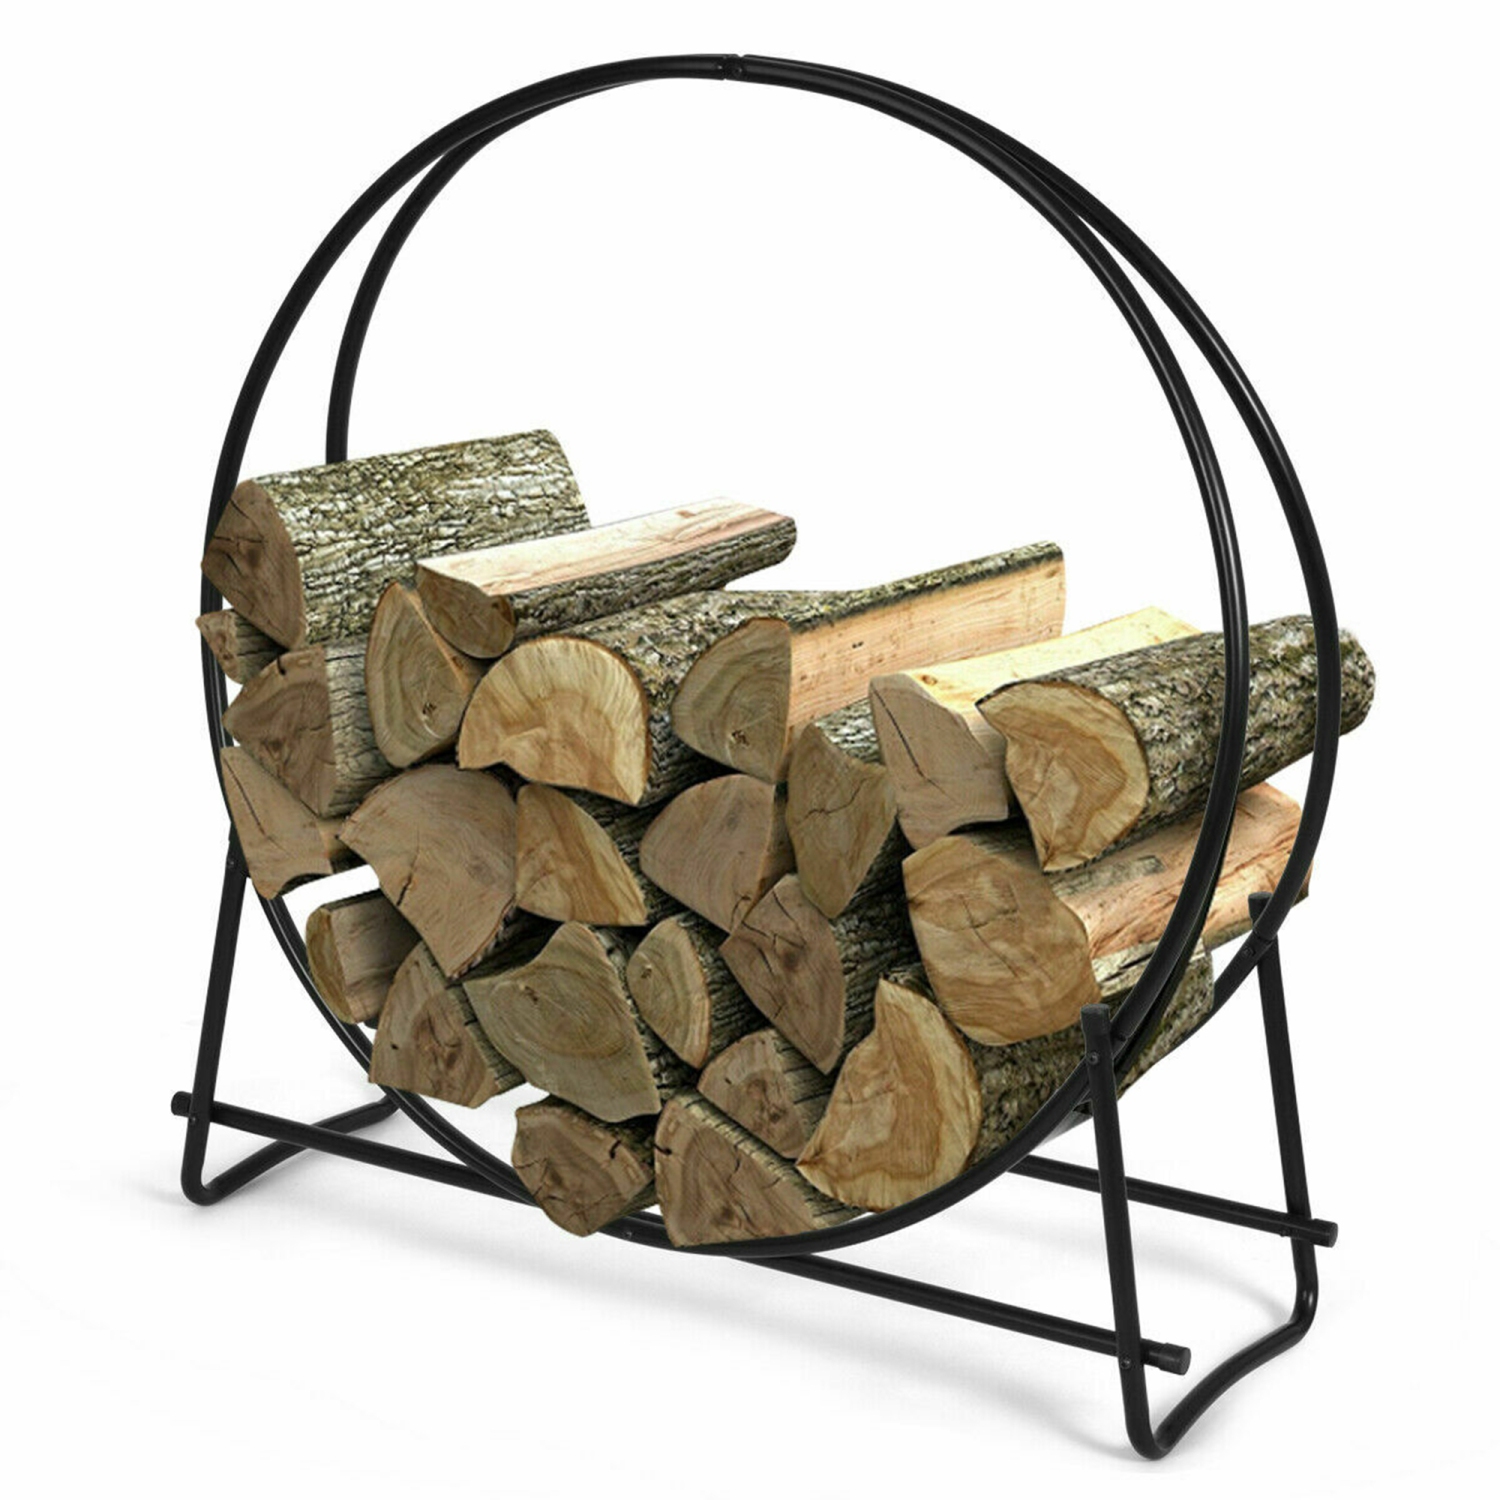 Gymax 40'' Steel Tubular Log Hoop Round Firewood Storage Holder Rack